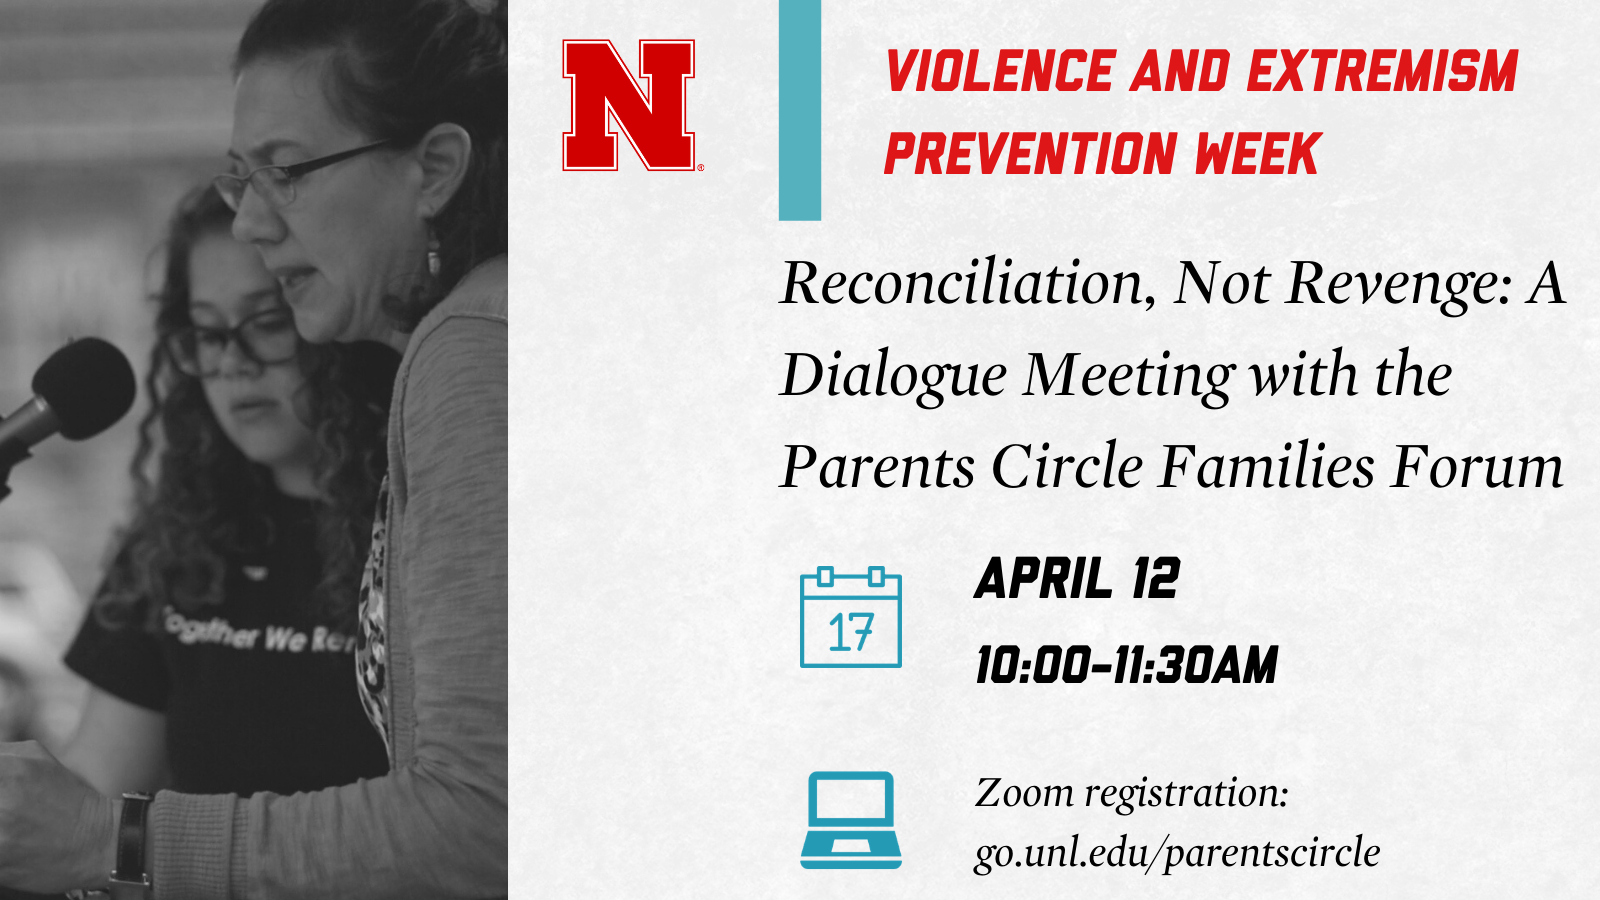 Reconciliation, Not Revenge: A Dialogue Meeting with the Parents Circle Families Forum